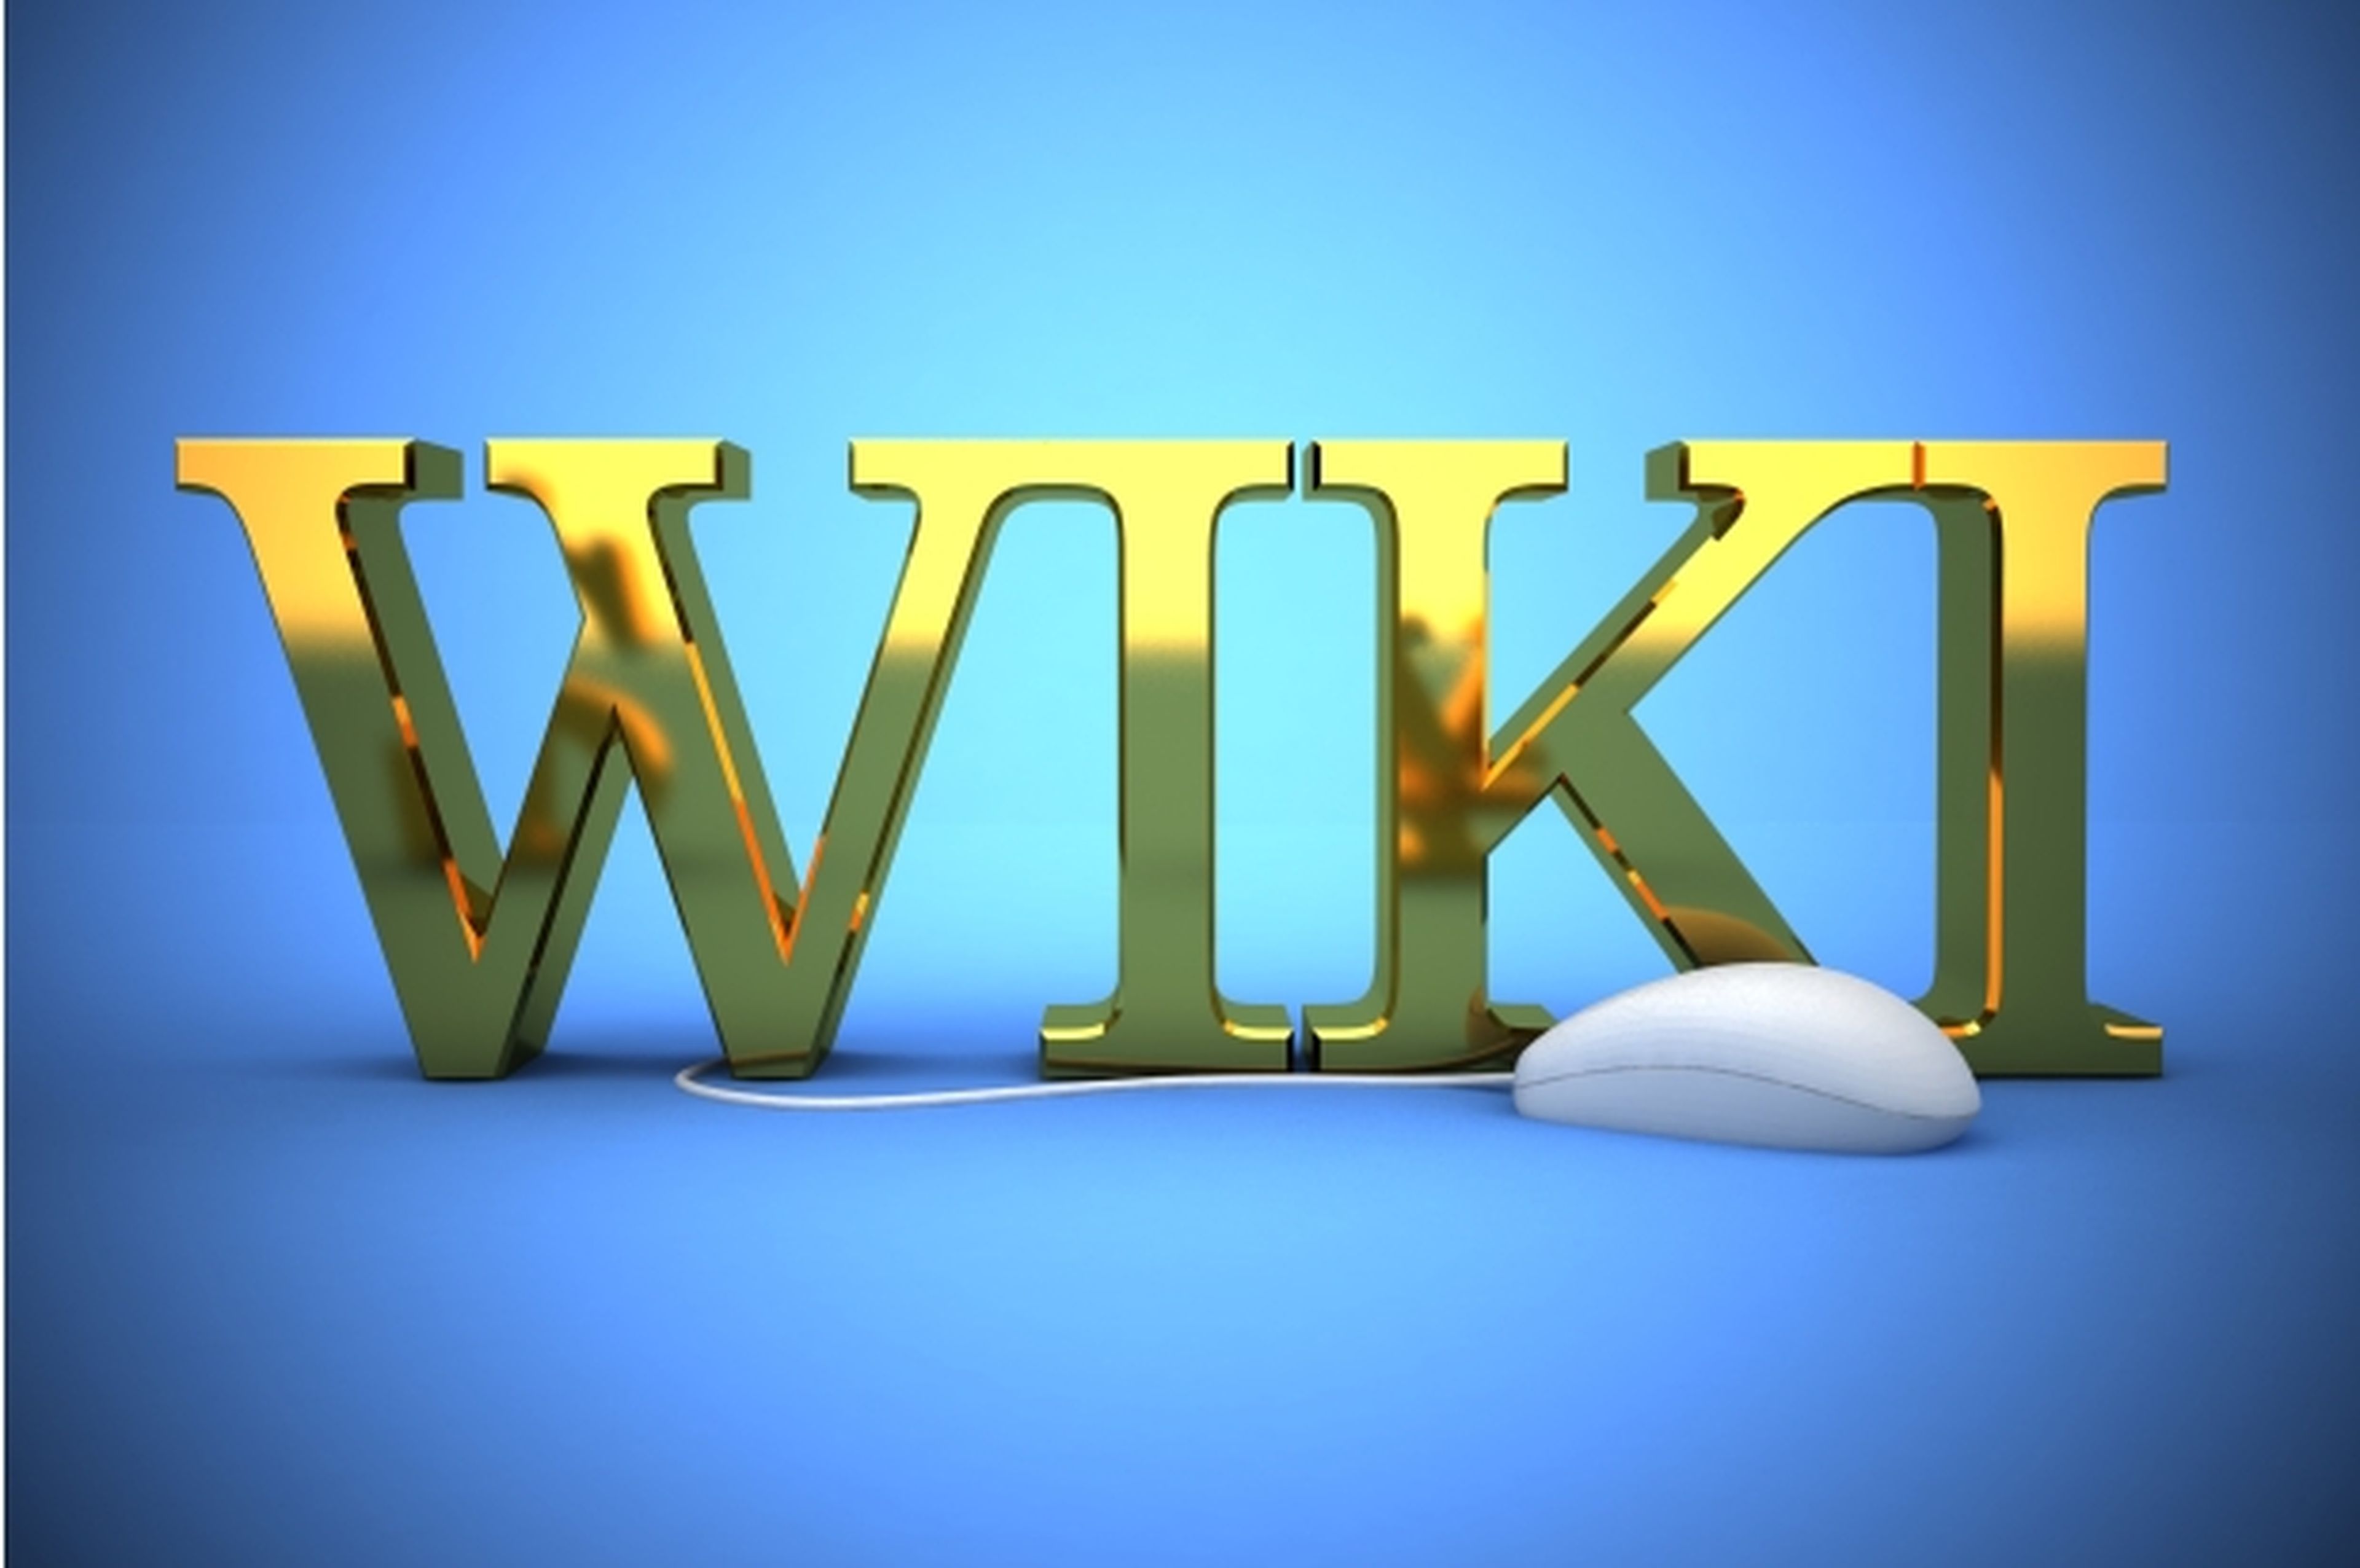 Descarga la Wikipedia para usarla offiline, con Kiwix